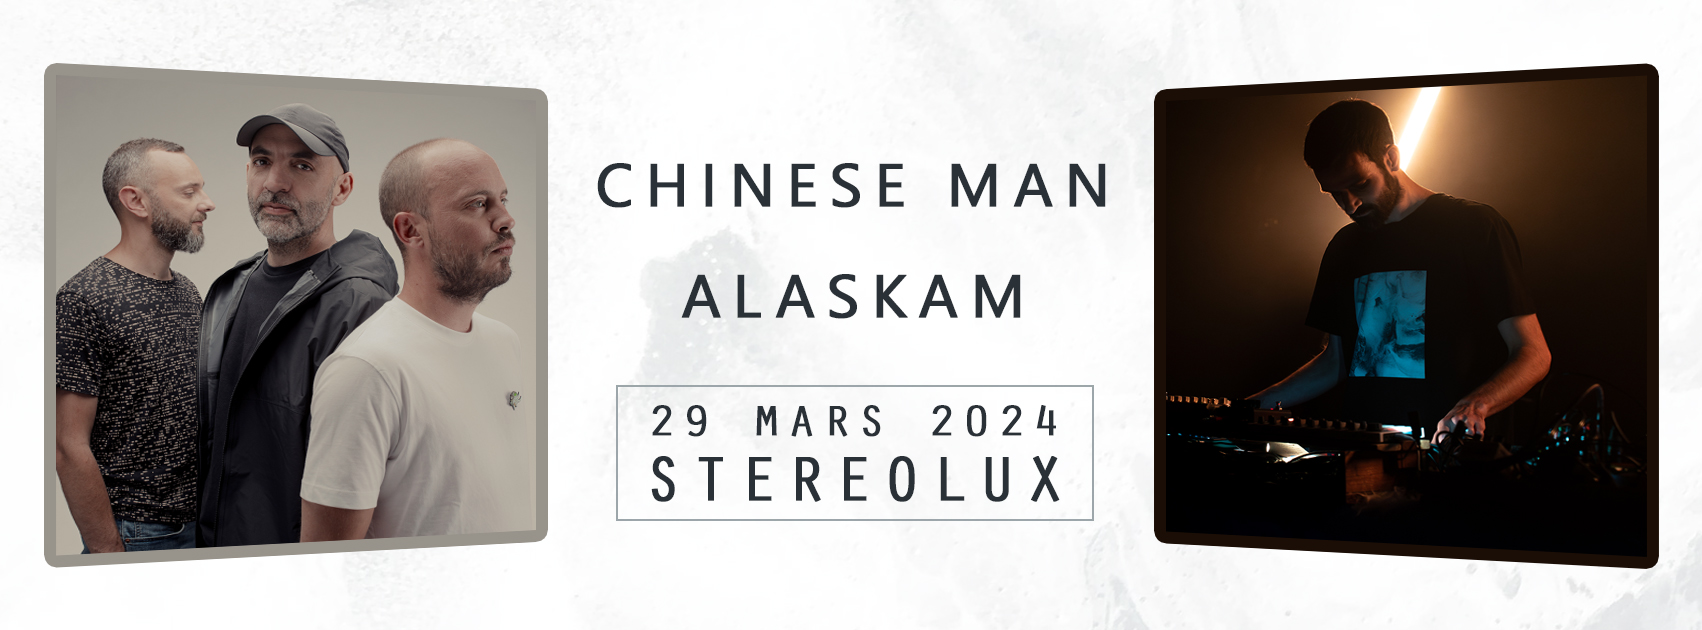 Chinese man Stereolux Alaskam